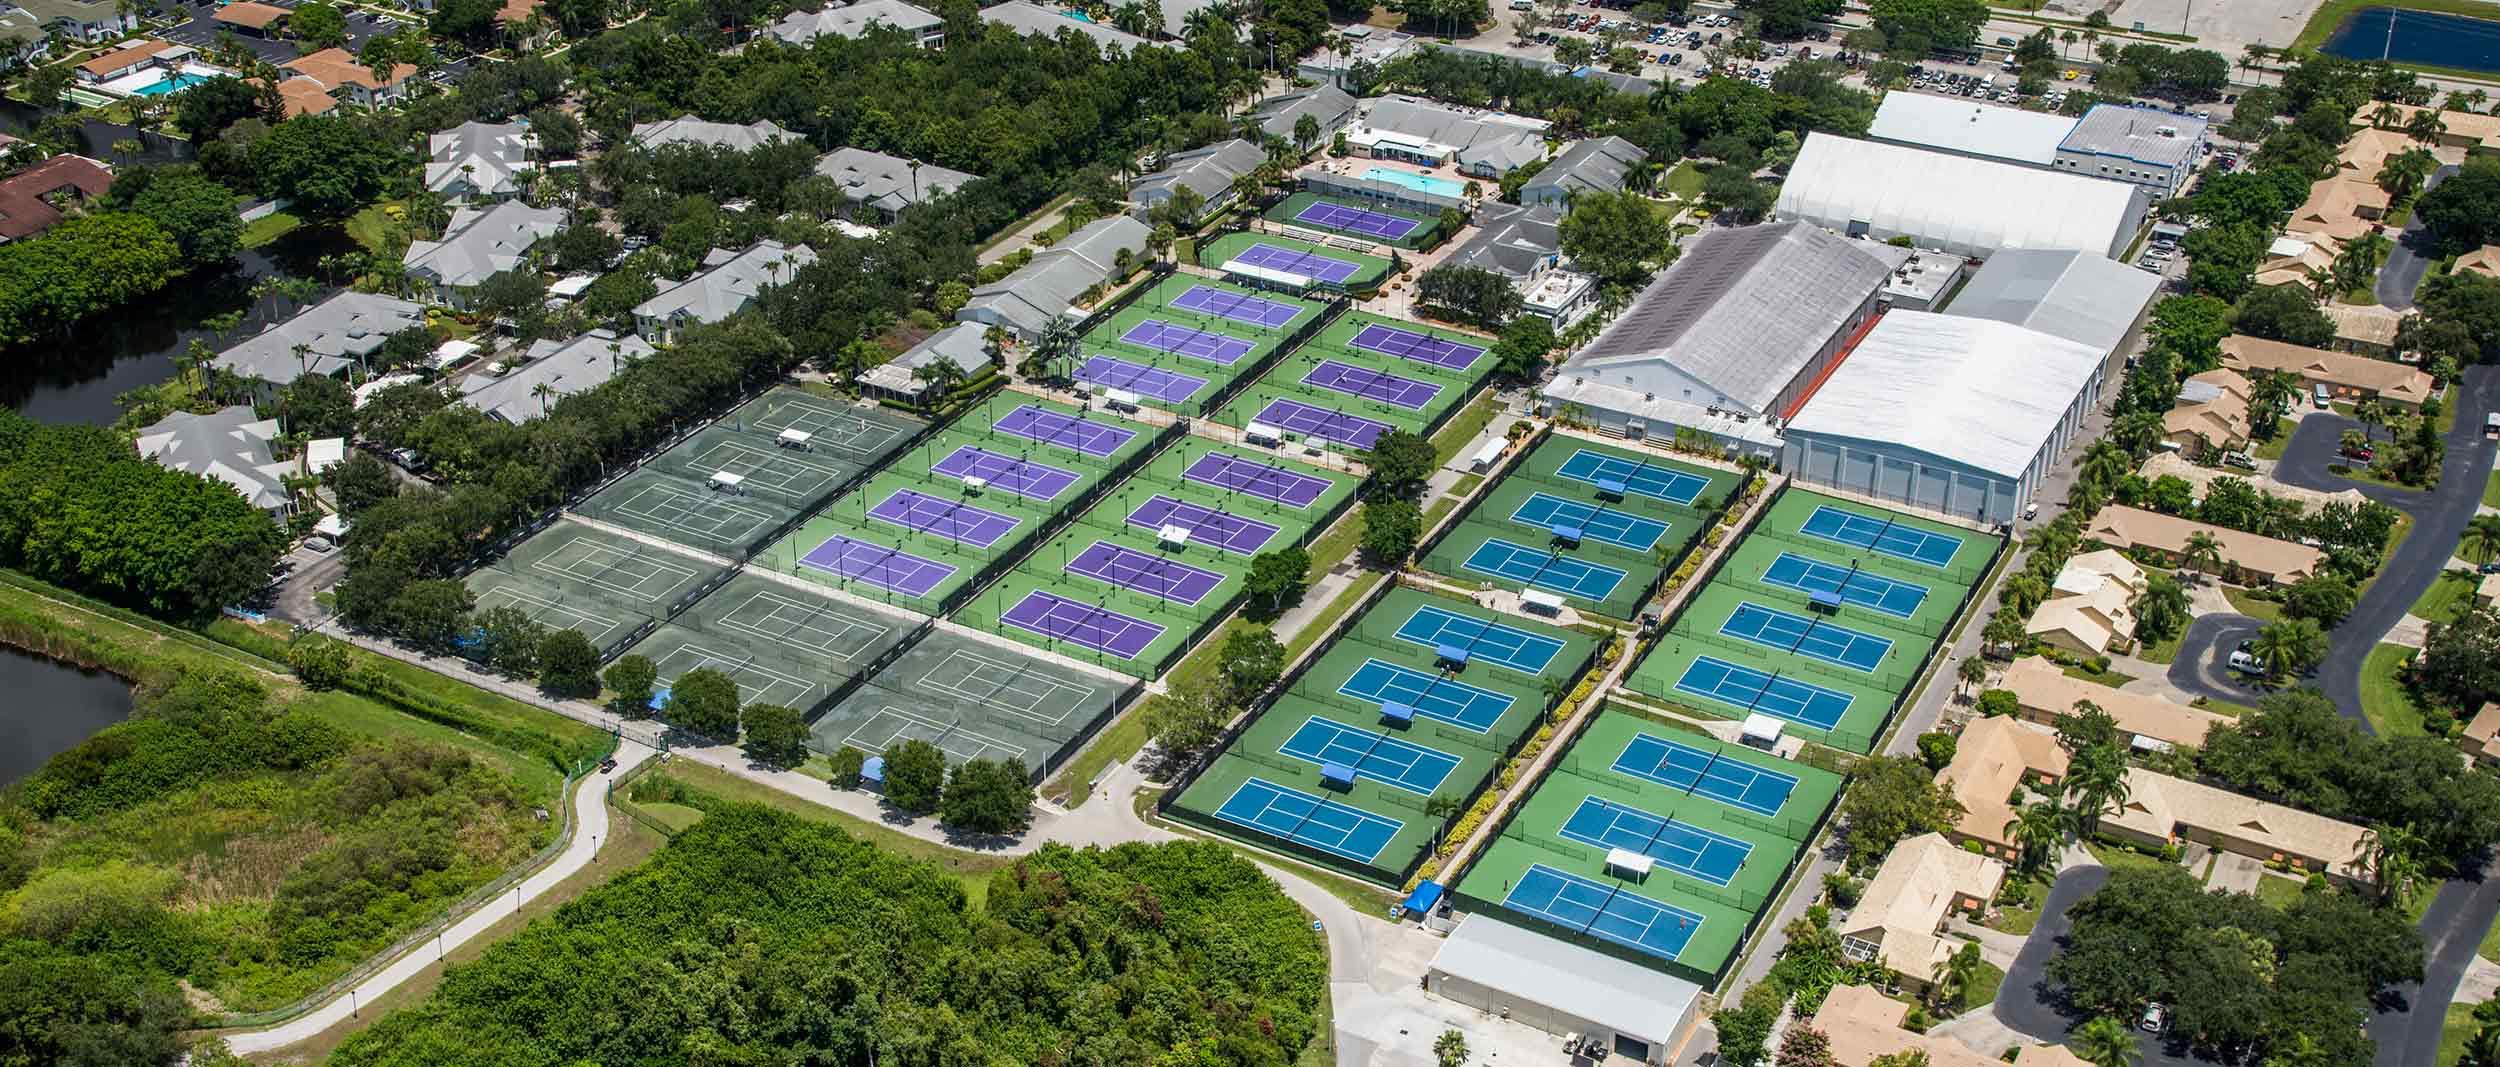 img academy tennis